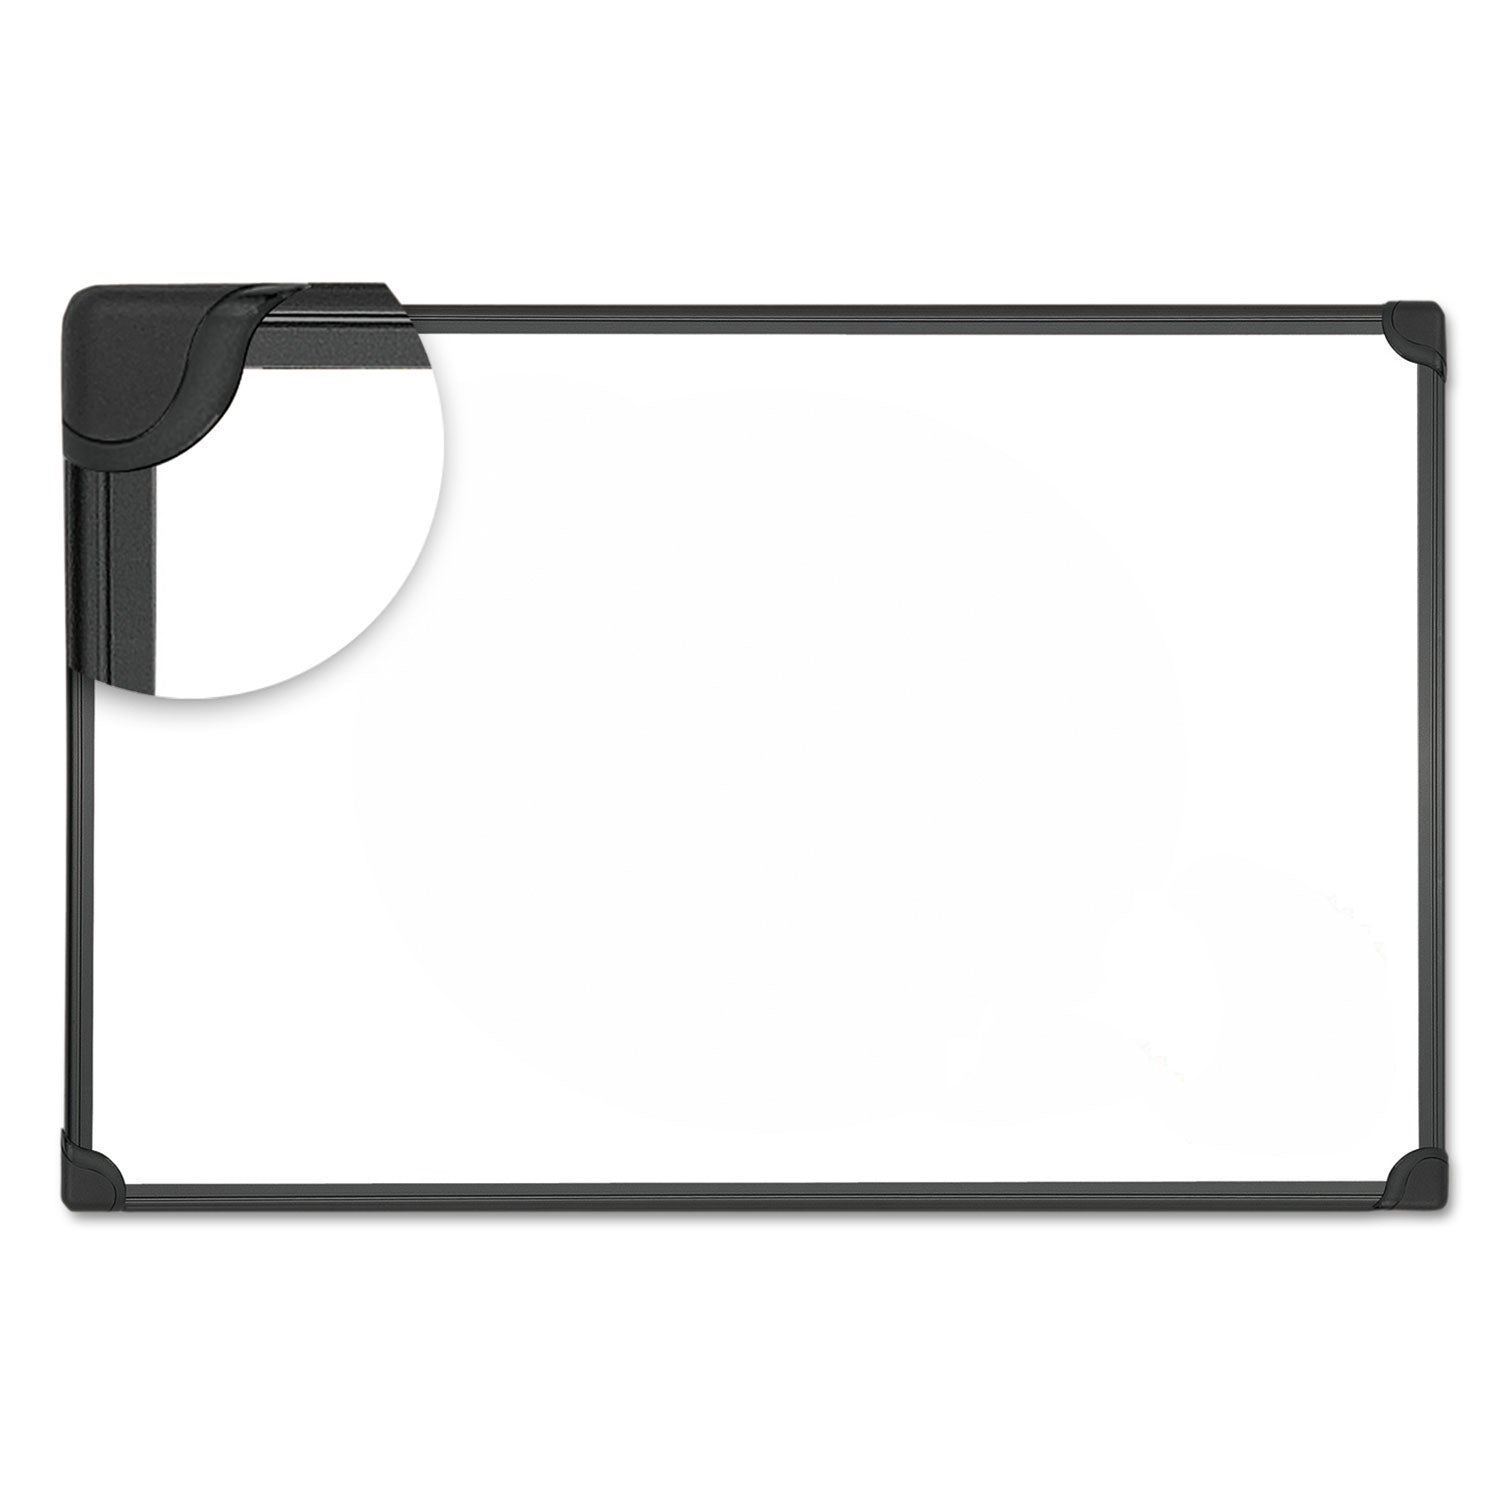 design-series-deluxe-magnetic-steel-dry-erase-marker-board-48-x-36-white-surface-black-aluminum-plastic-frame_unv43026 - 1